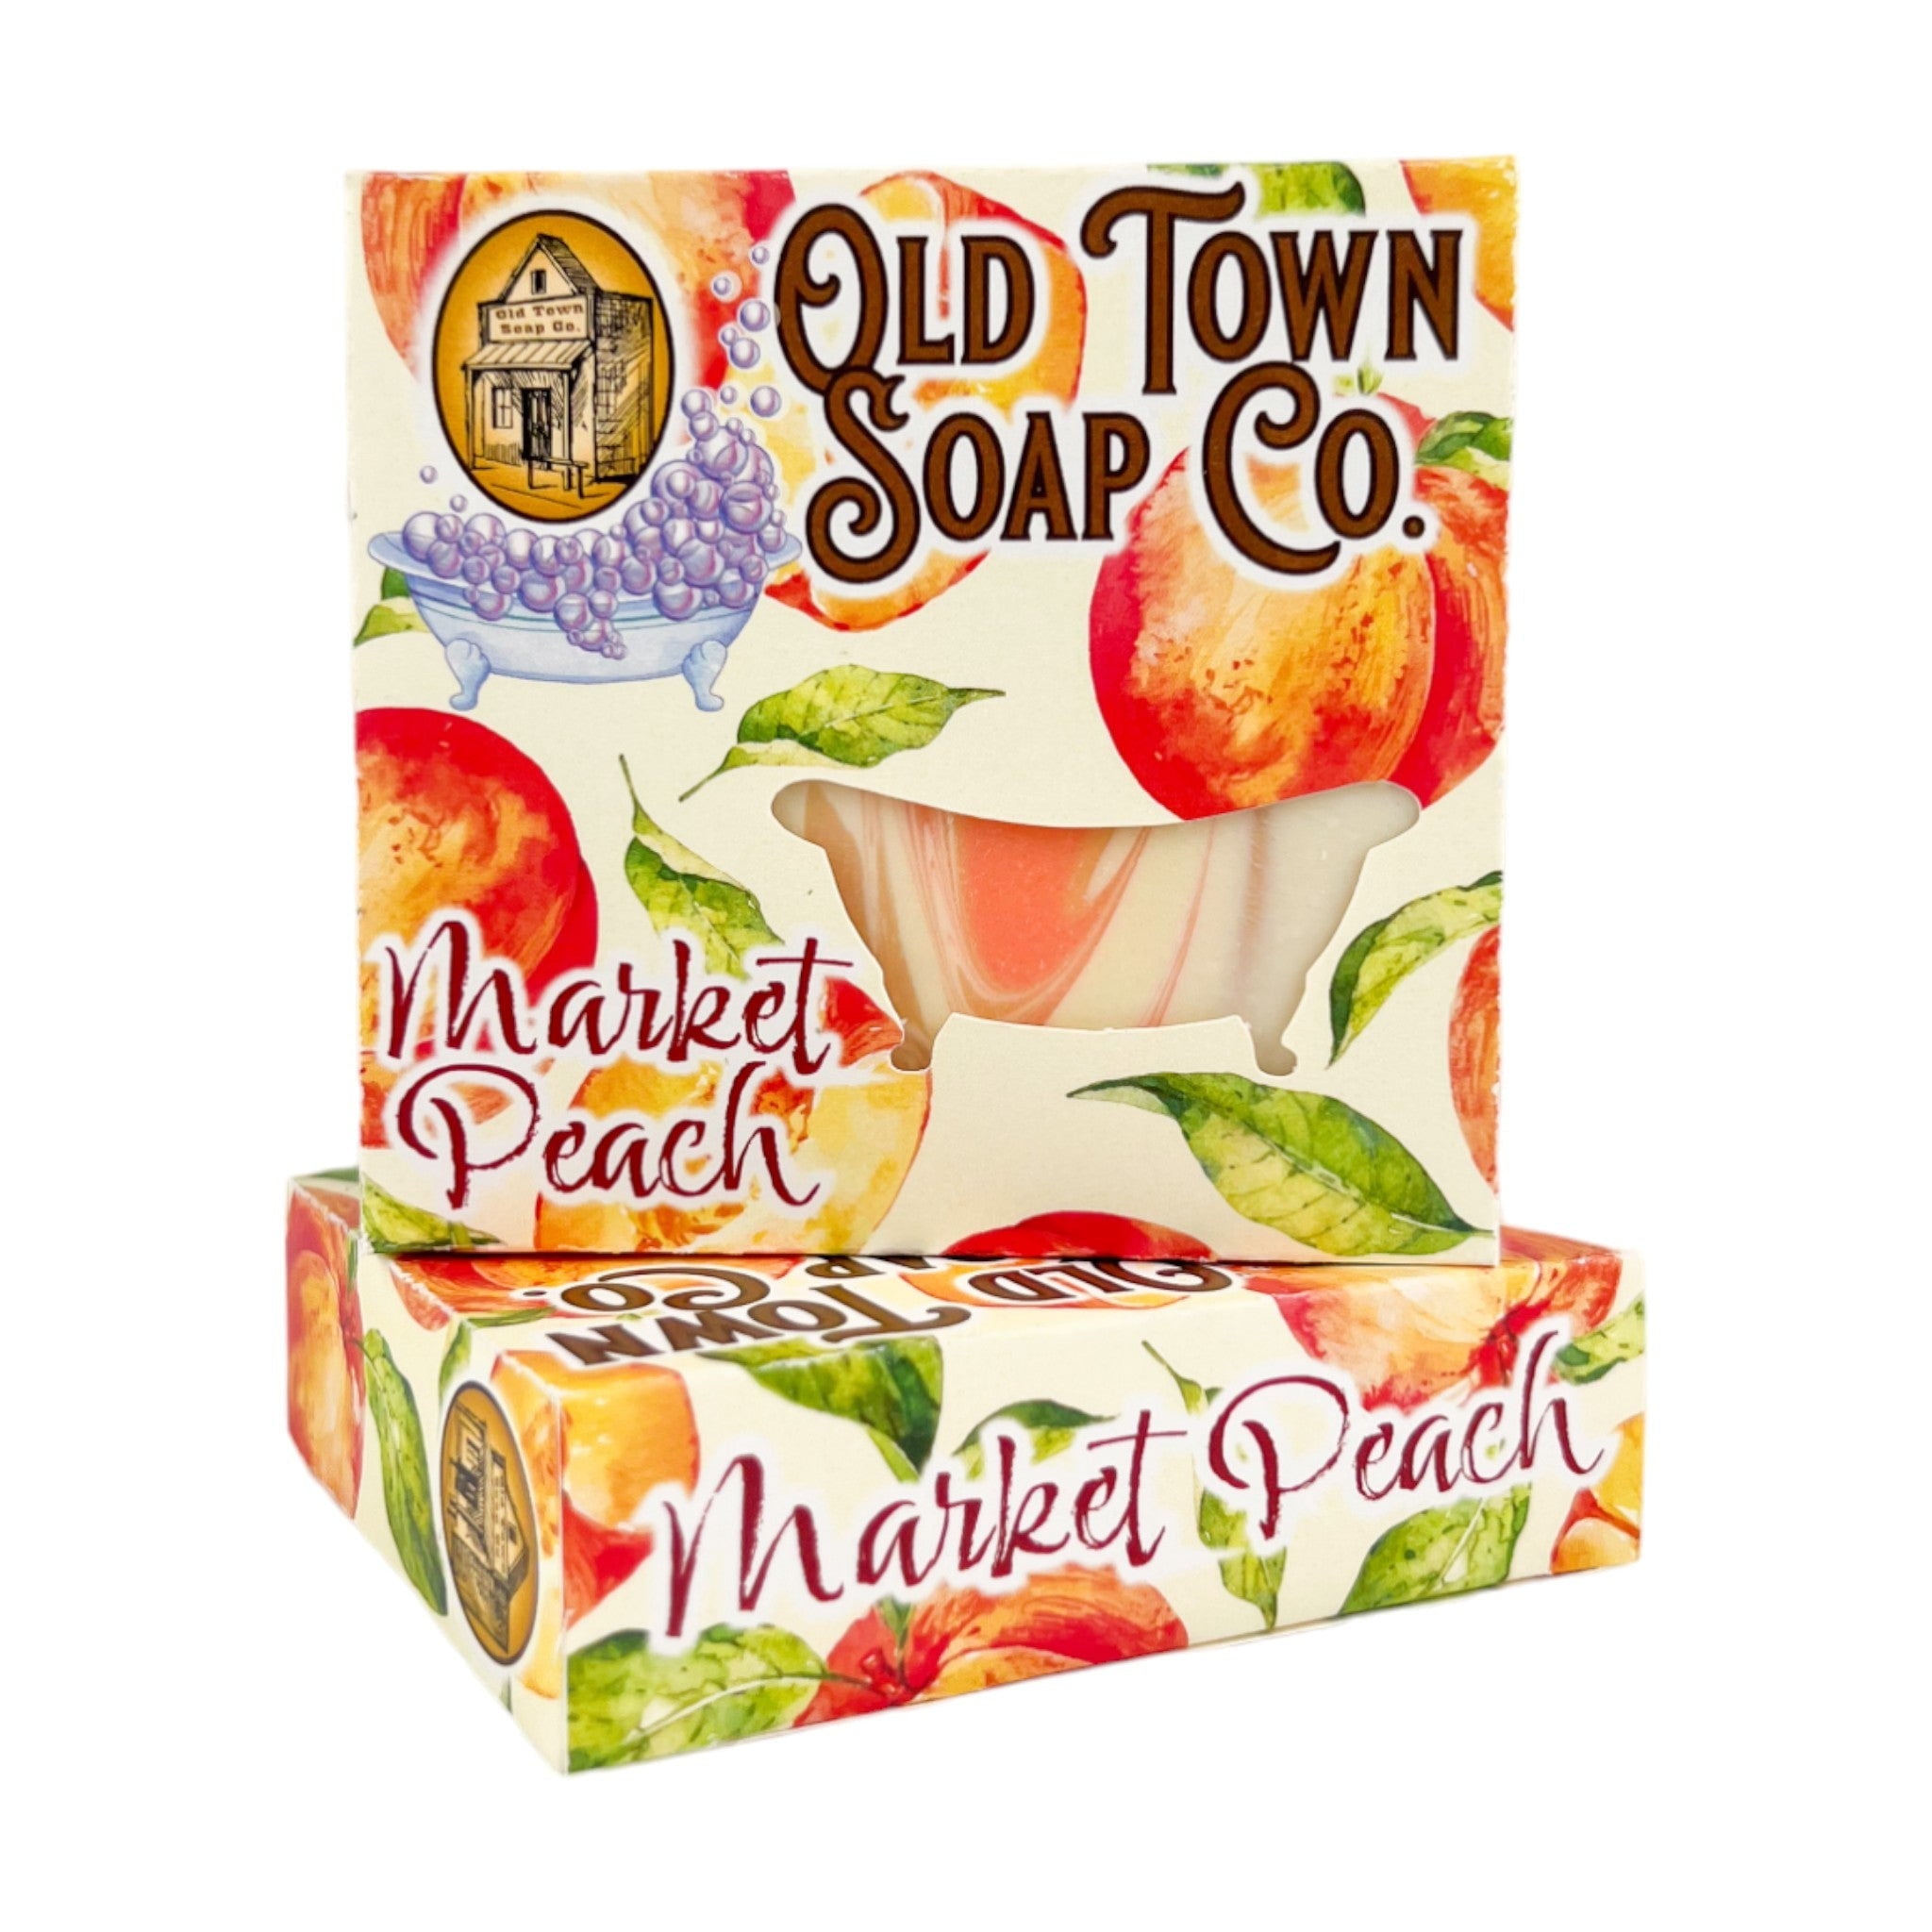 Market Peach -Bar Soap - Old Town Soap Co.